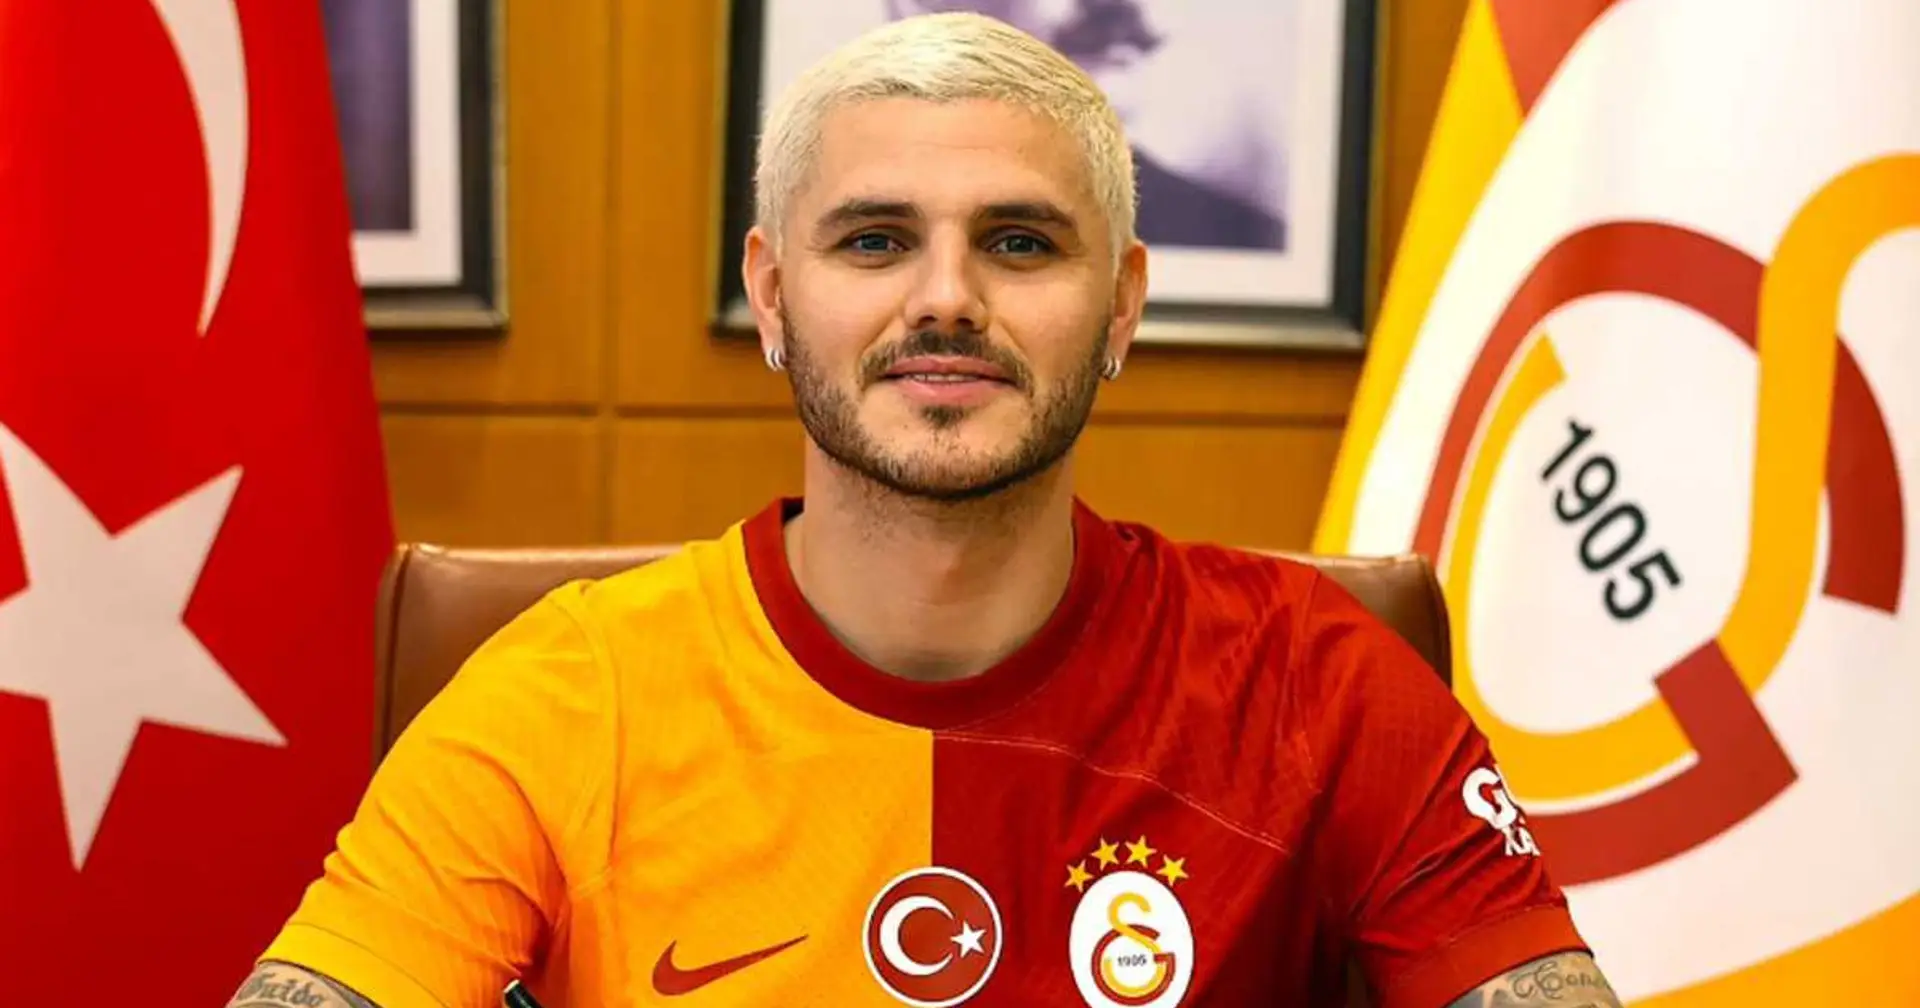 Icardi al Galatasaray rimpingua le casse dell’Inter: svelata la cifra incassata per l’ex Capitano